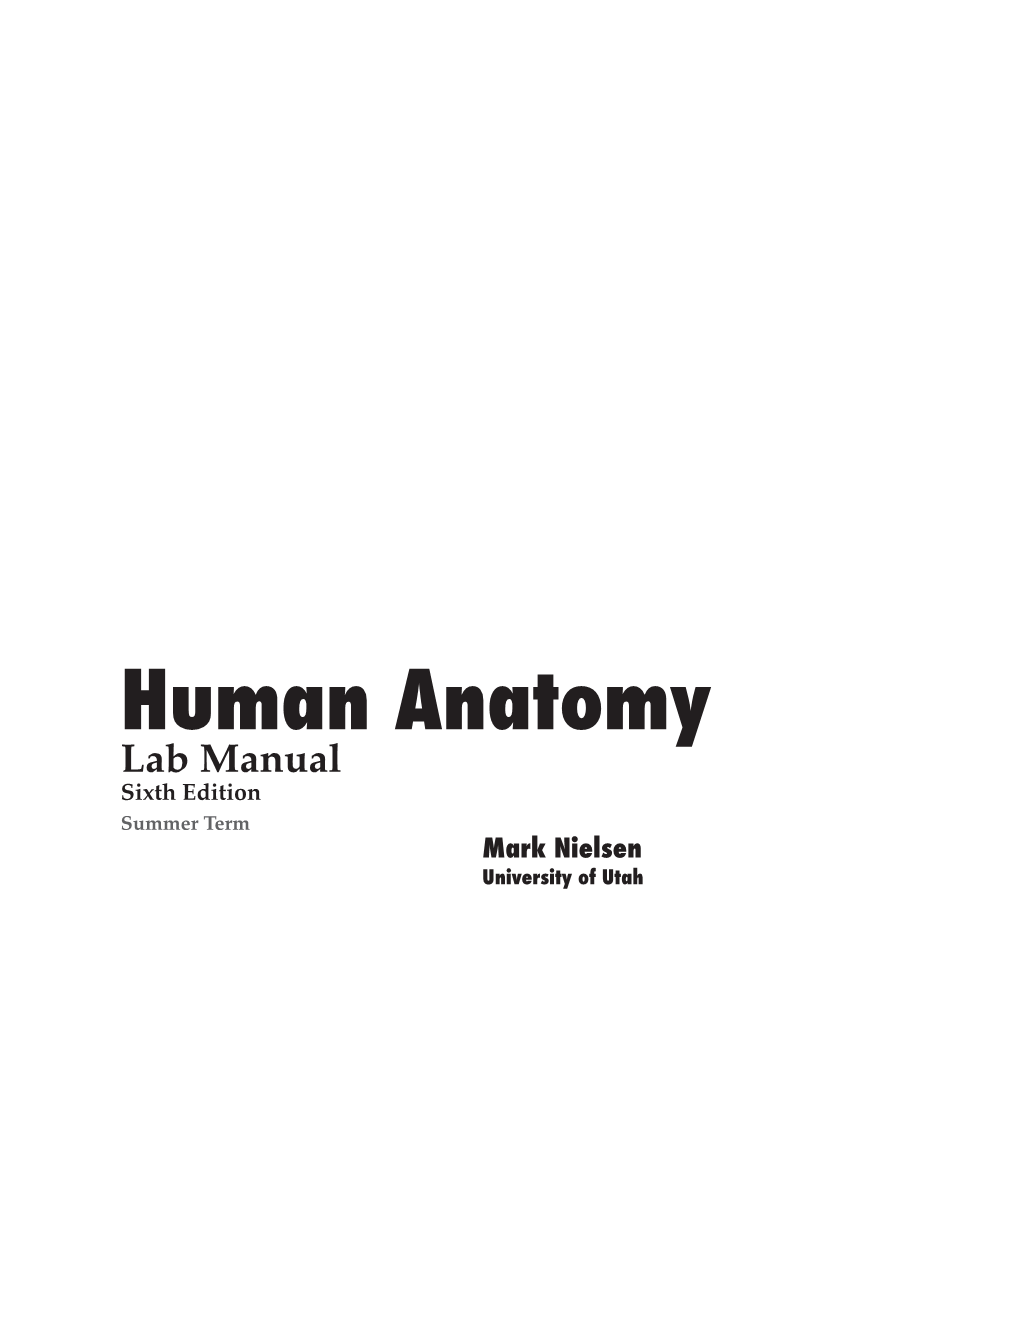 Human Anatomy Lab Manual Sixth Edition Summer Term Mark Nielsen University of Utah